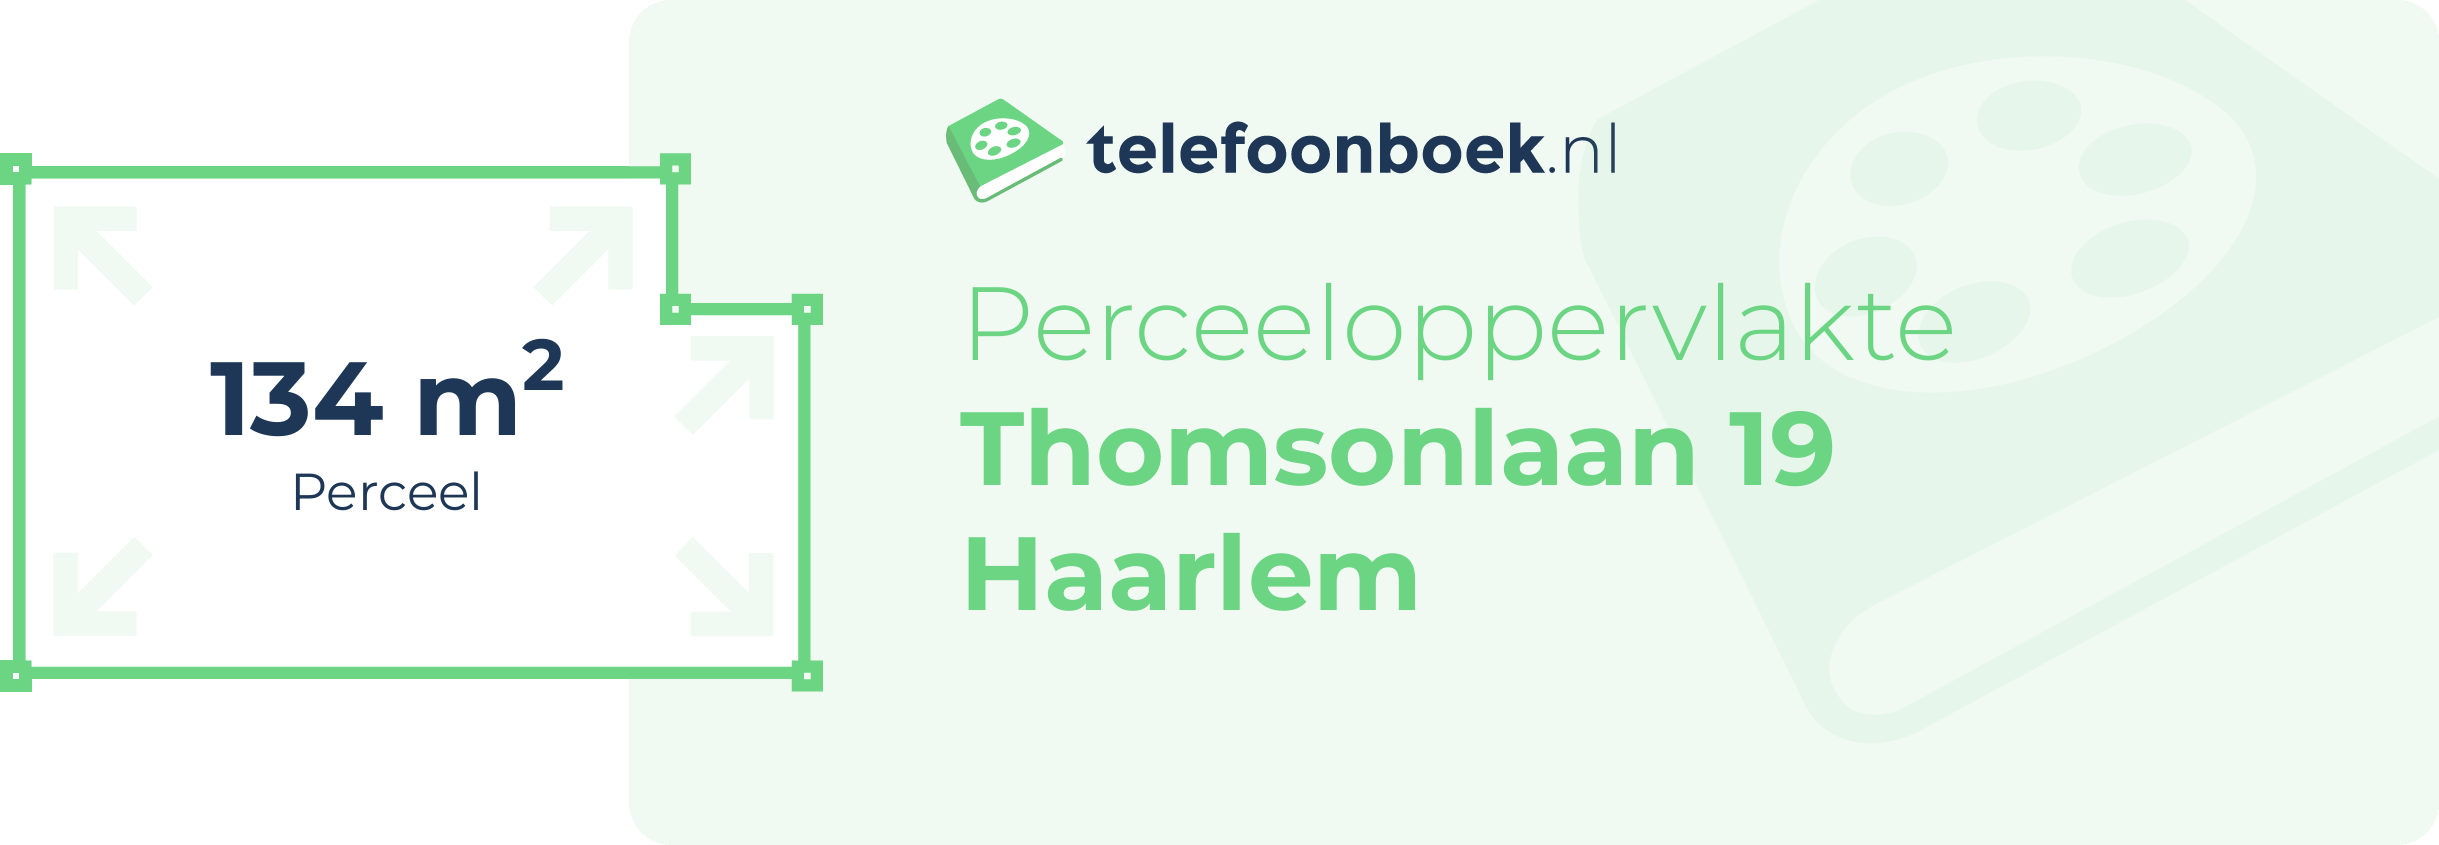 Perceeloppervlakte Thomsonlaan 19 Haarlem